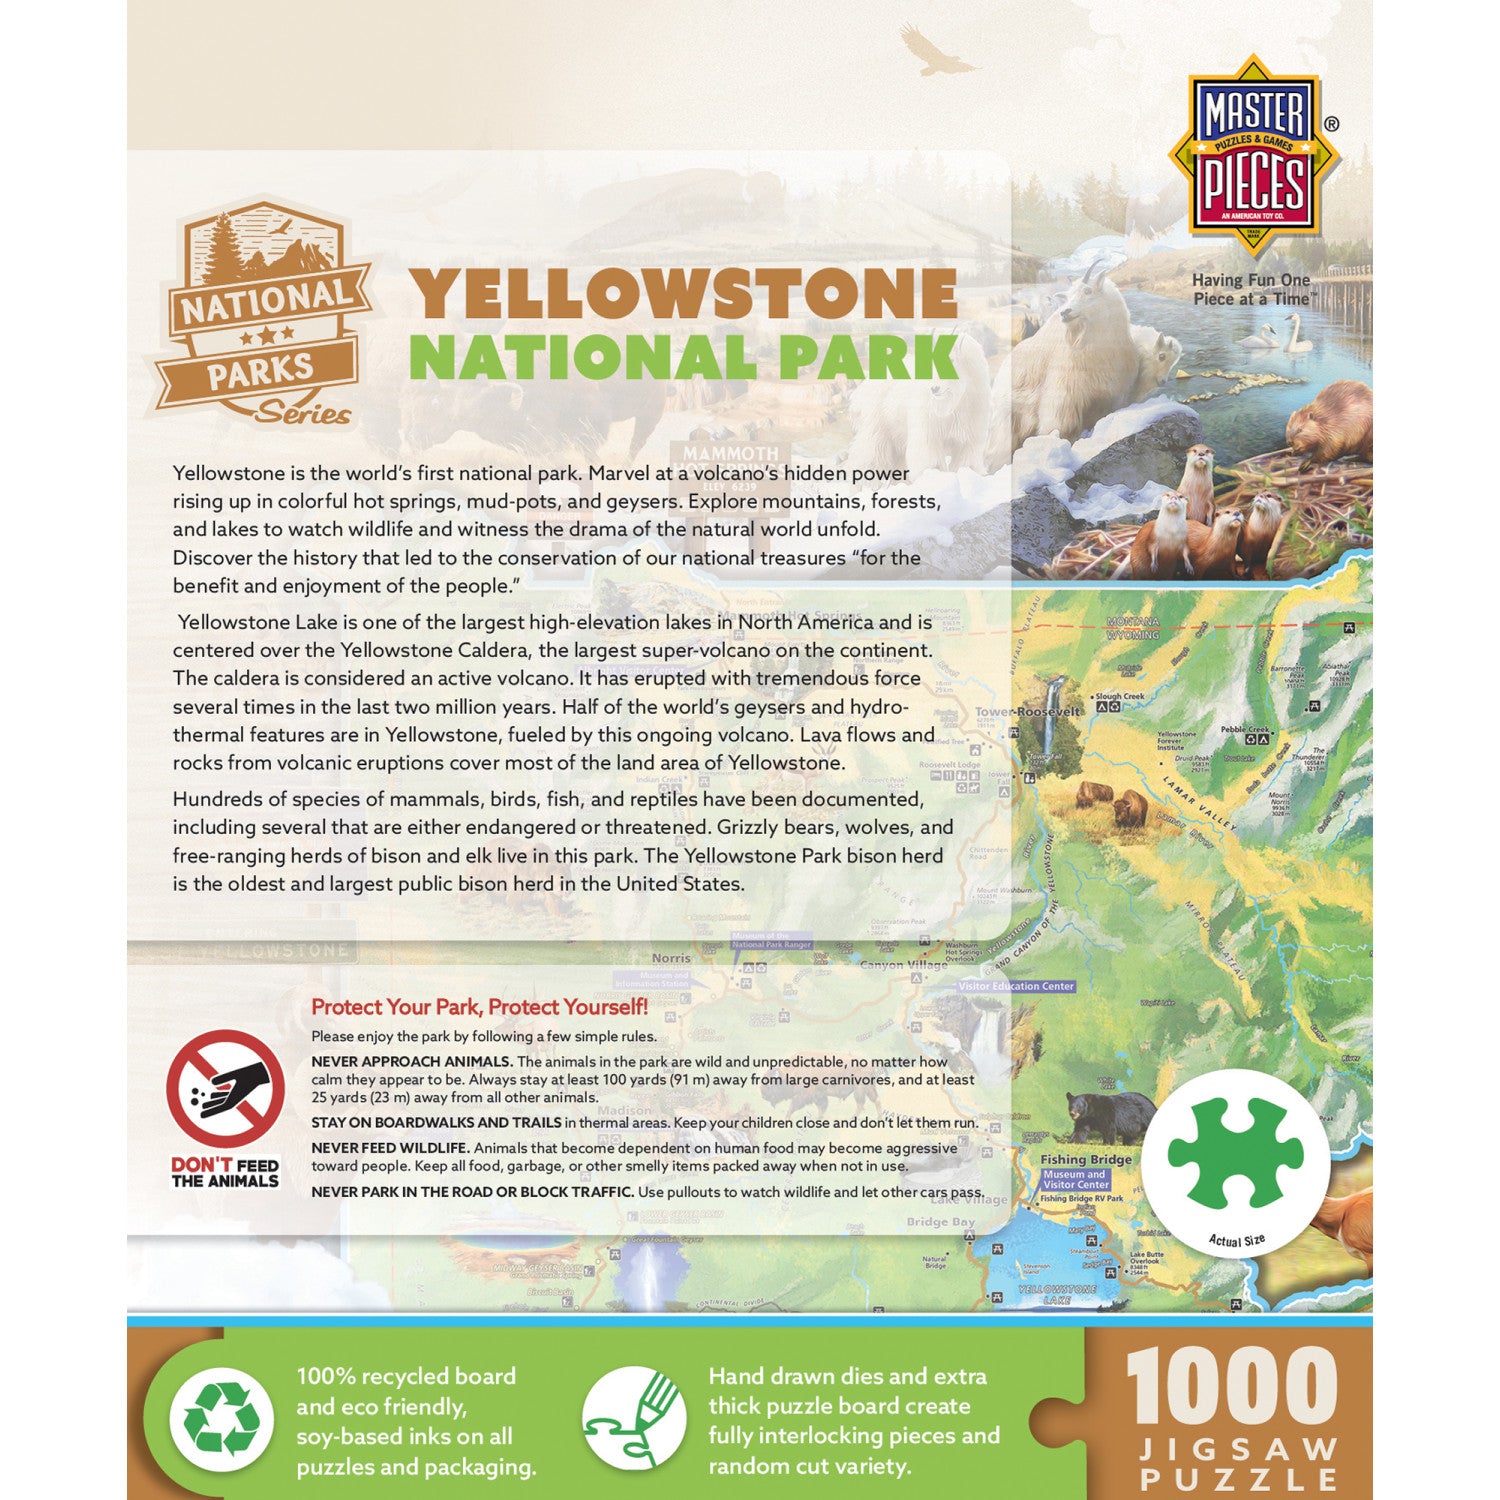 Yellowstone National Park 1000 Piece Jigsaw Puzzle